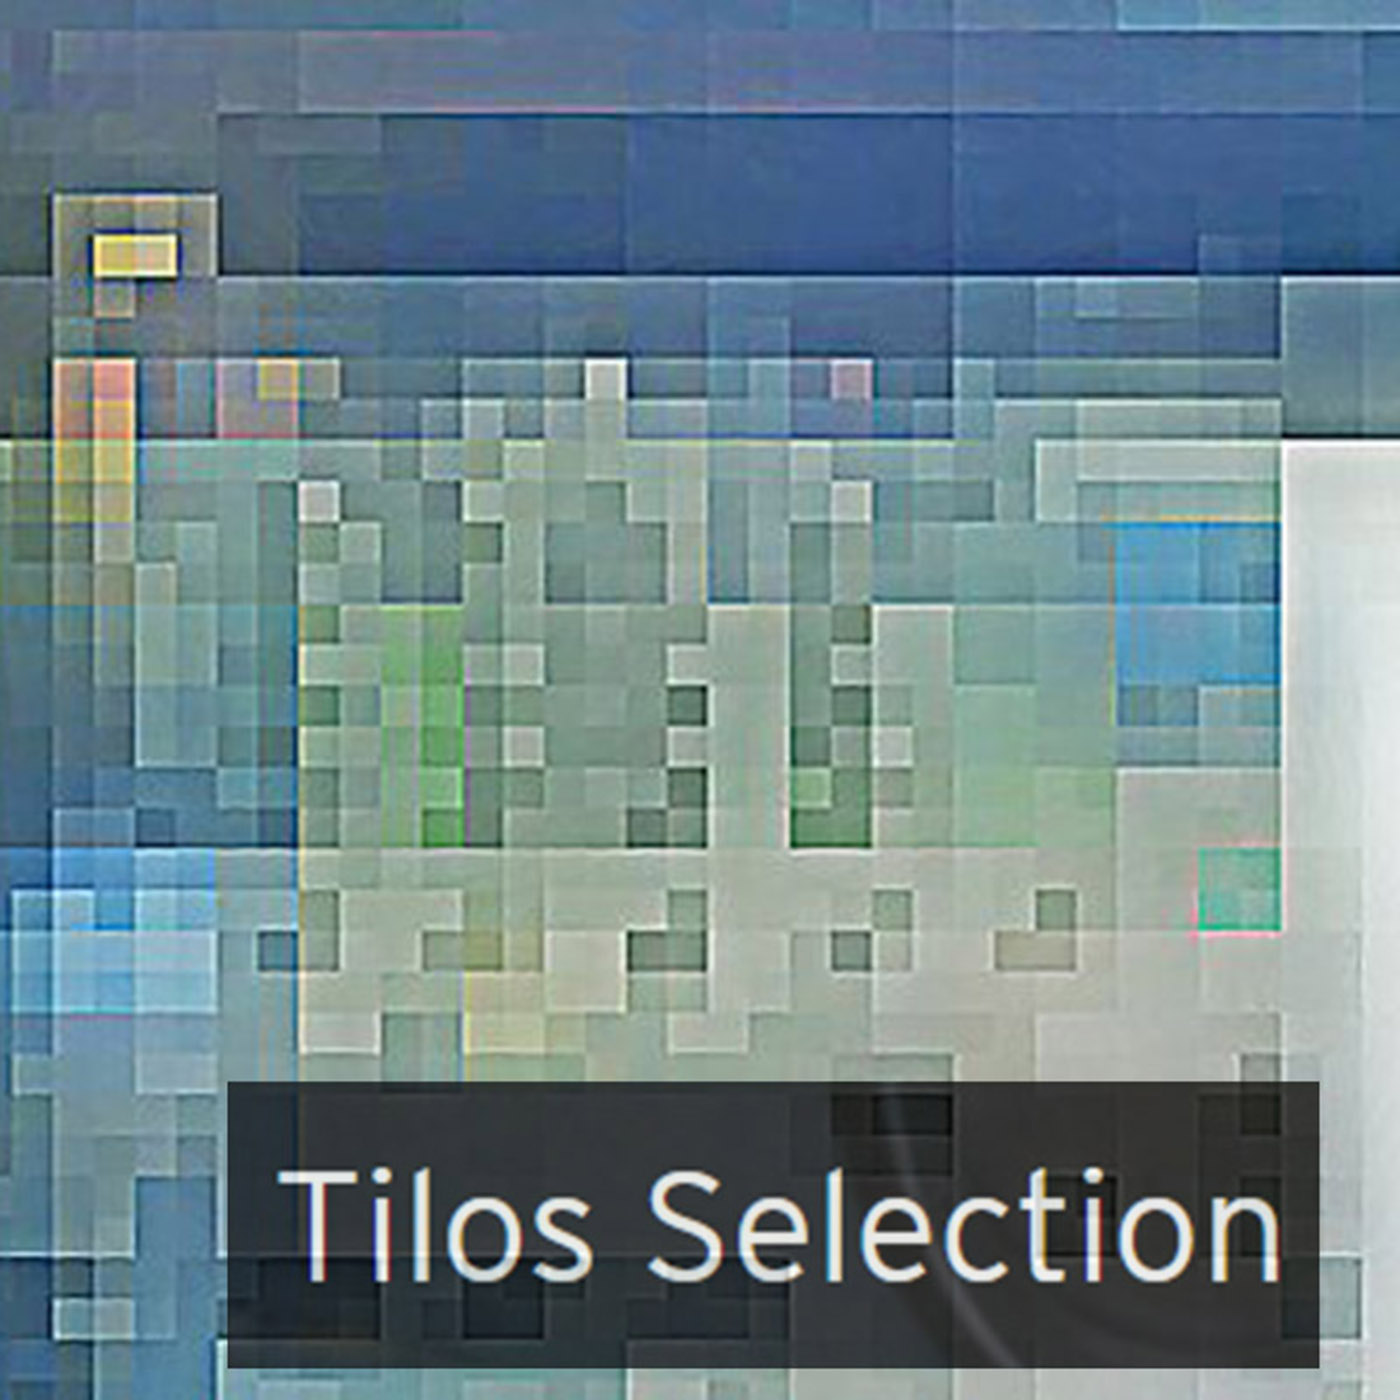 Tilos selection